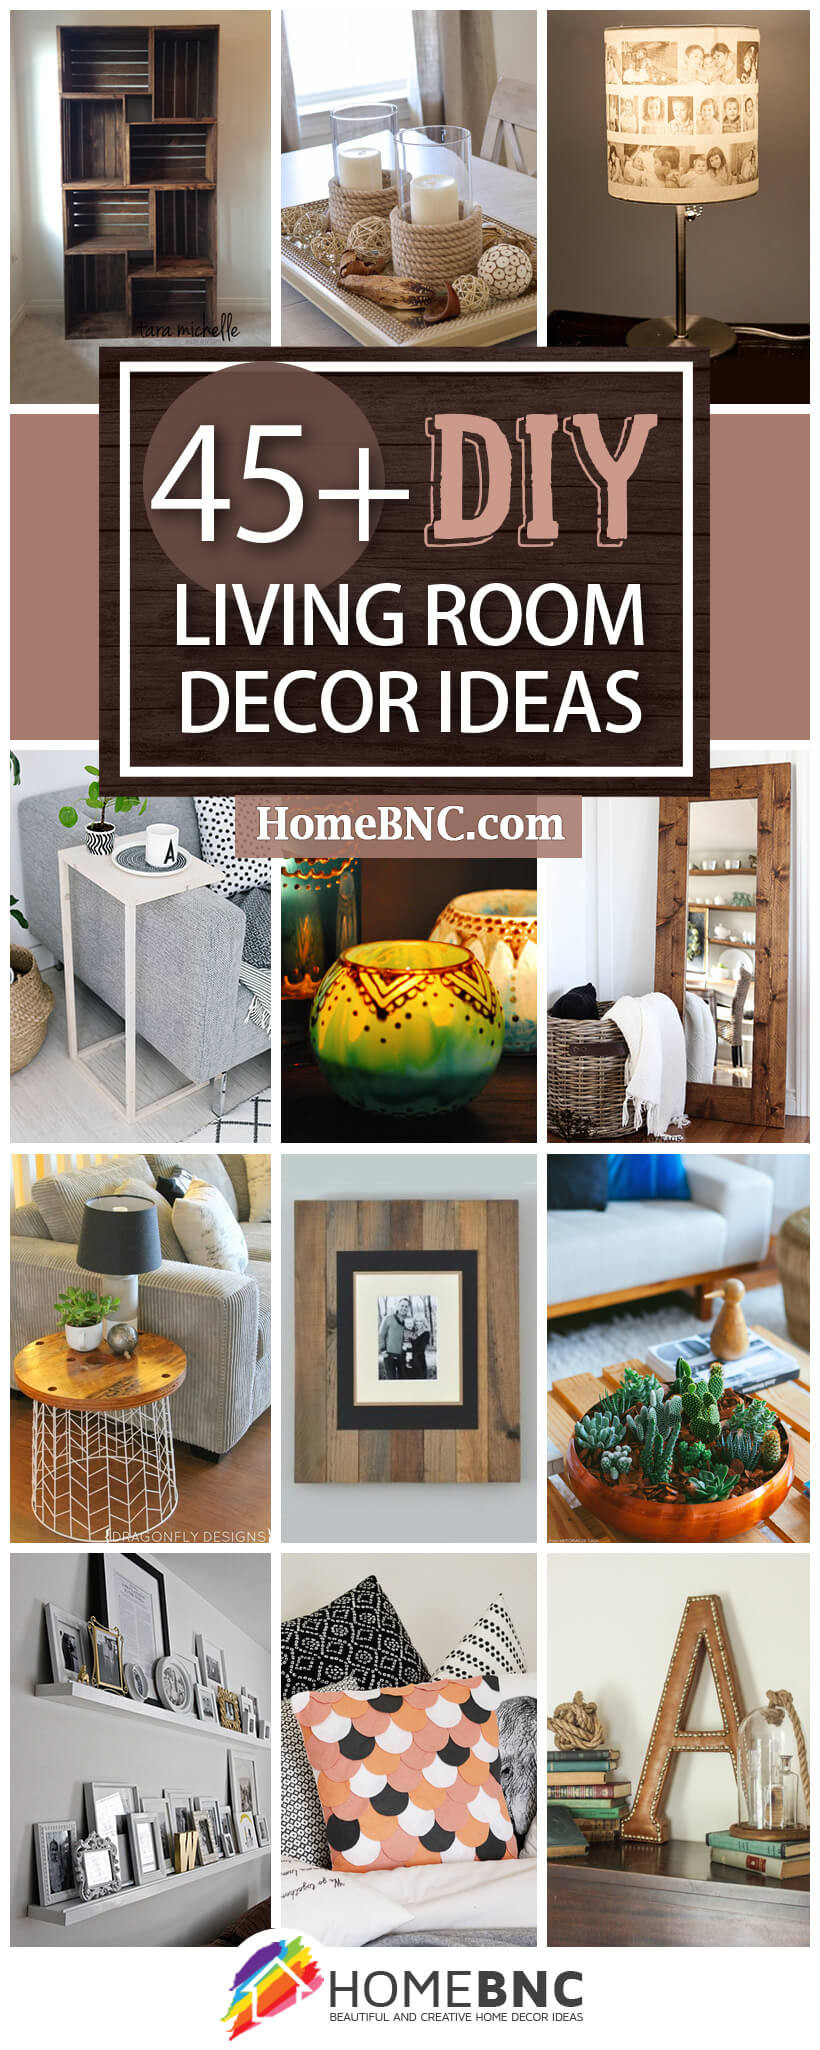 DIY Decorating Ideas For Living Rooms
 45 Best DIY Living Room Decorating Ideas and Designs for 2019